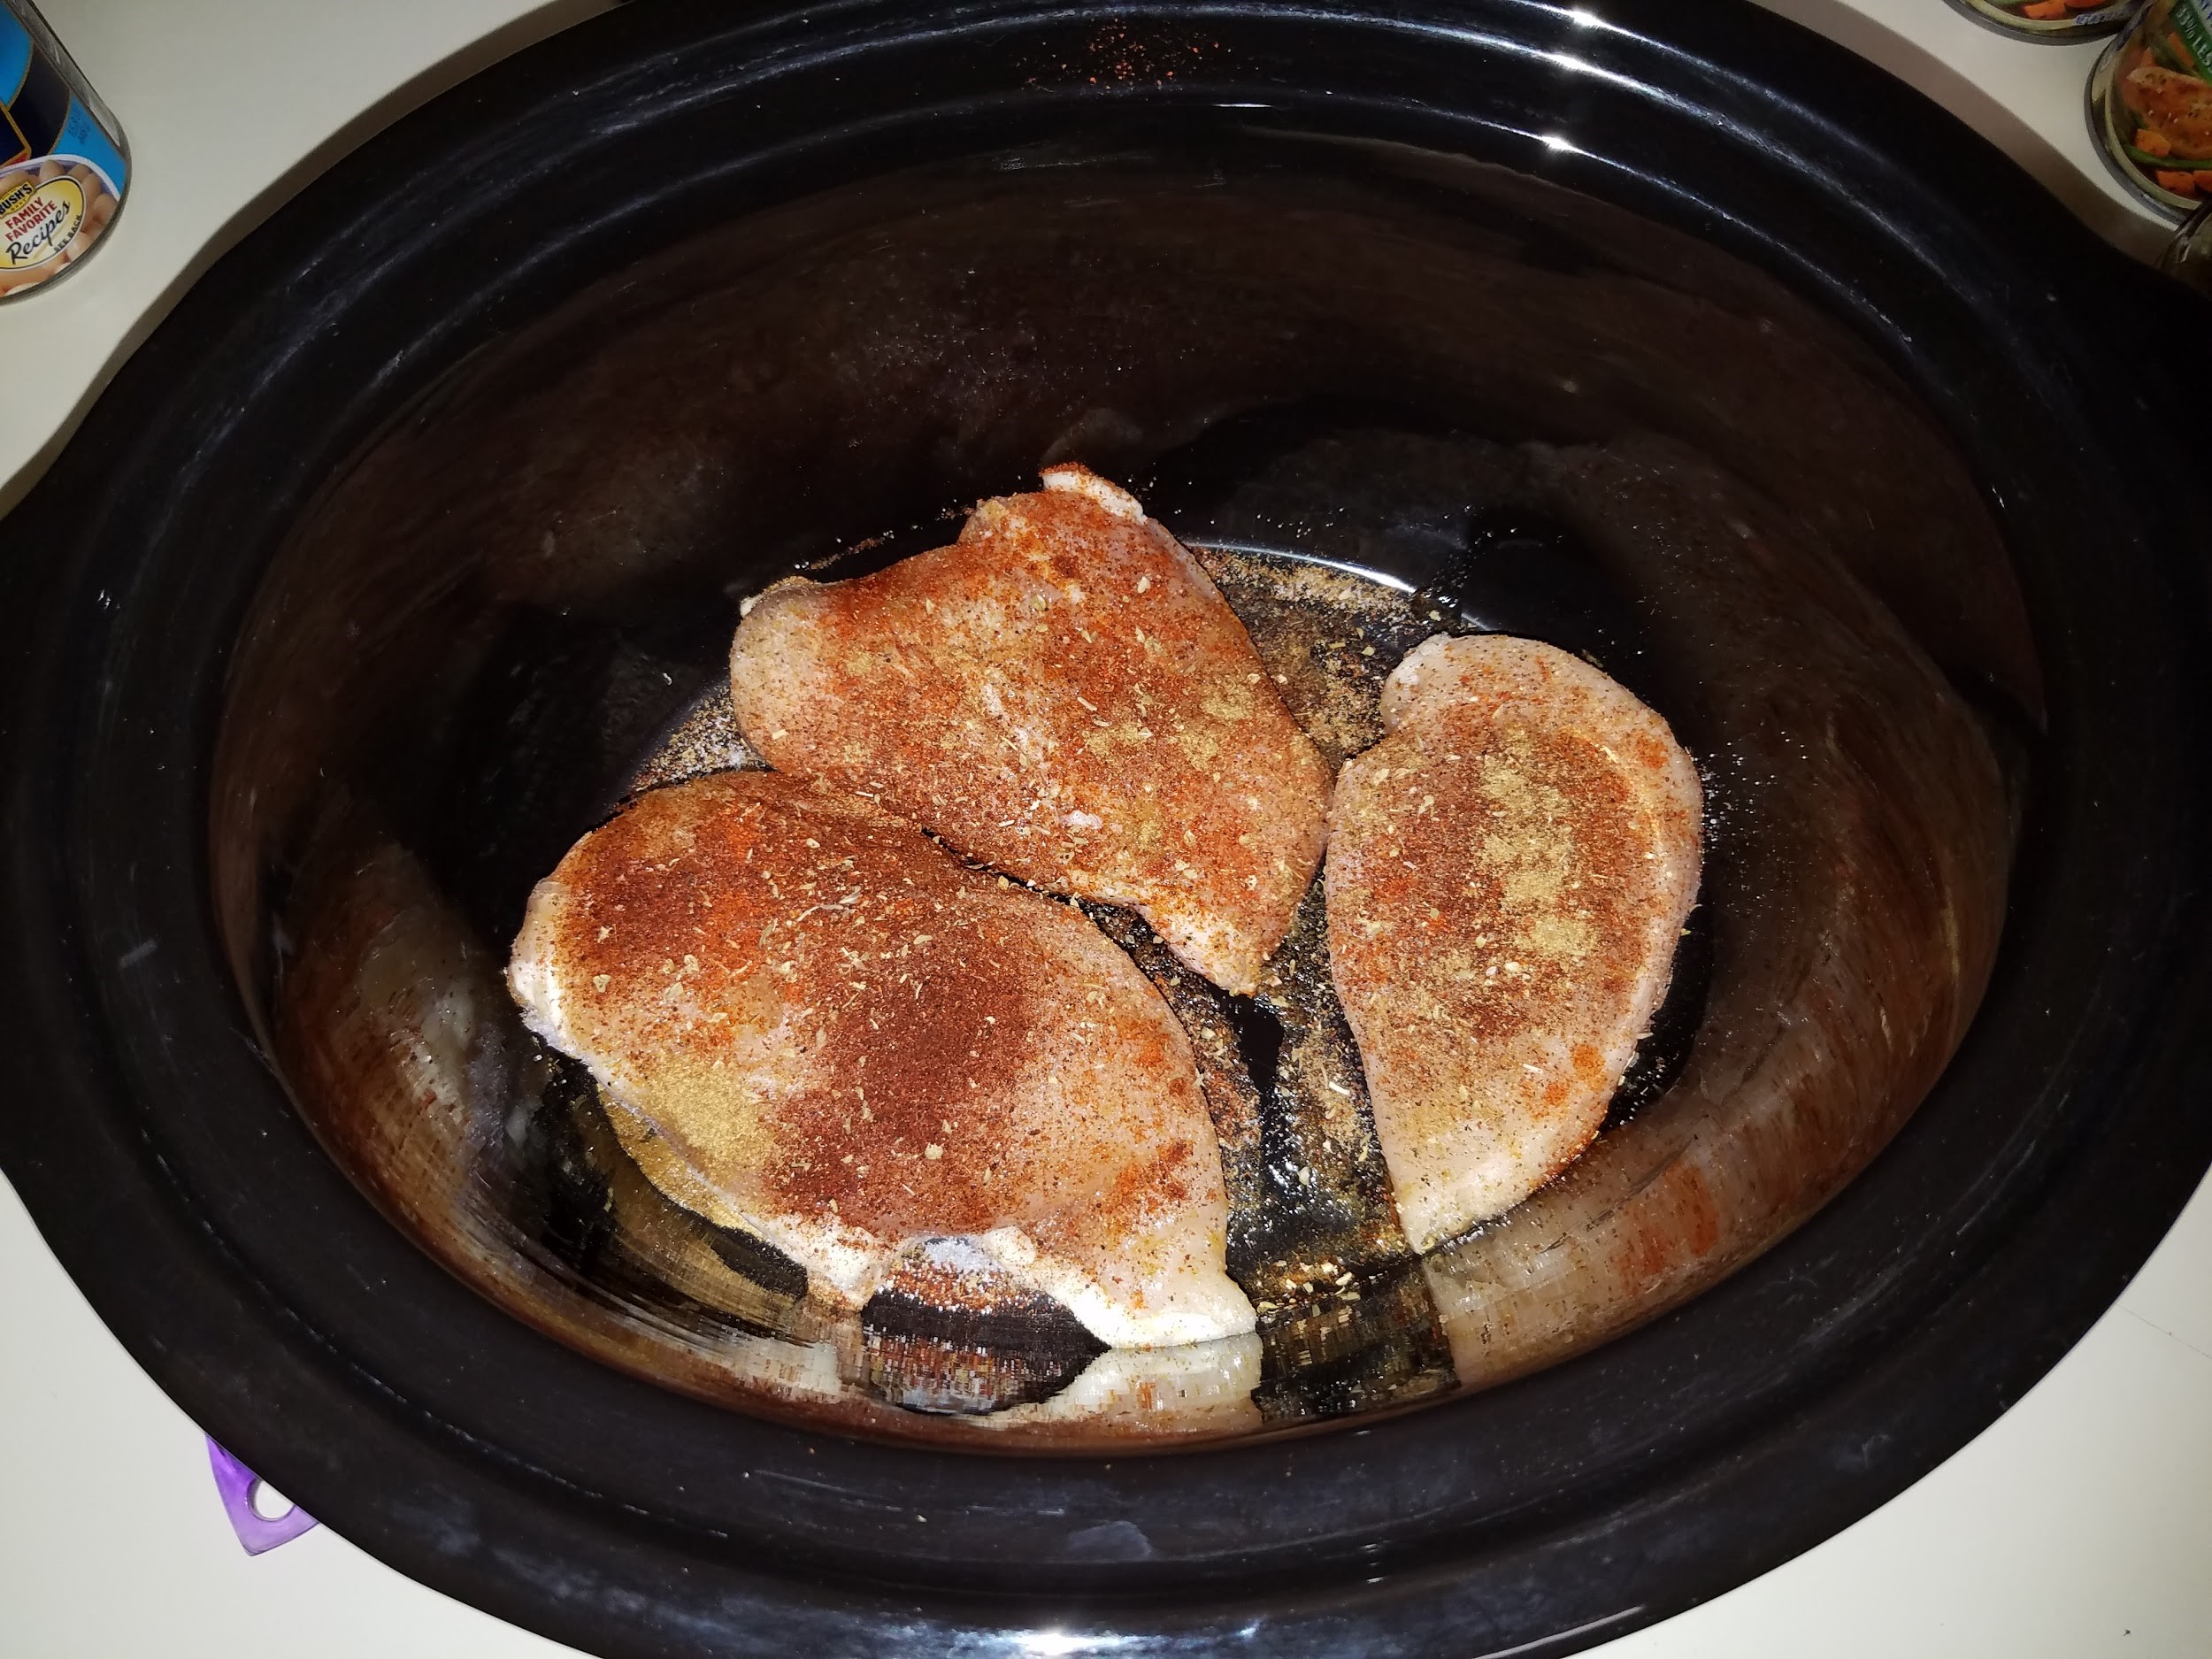 Chicken breasts in crockpot for white chicken chili